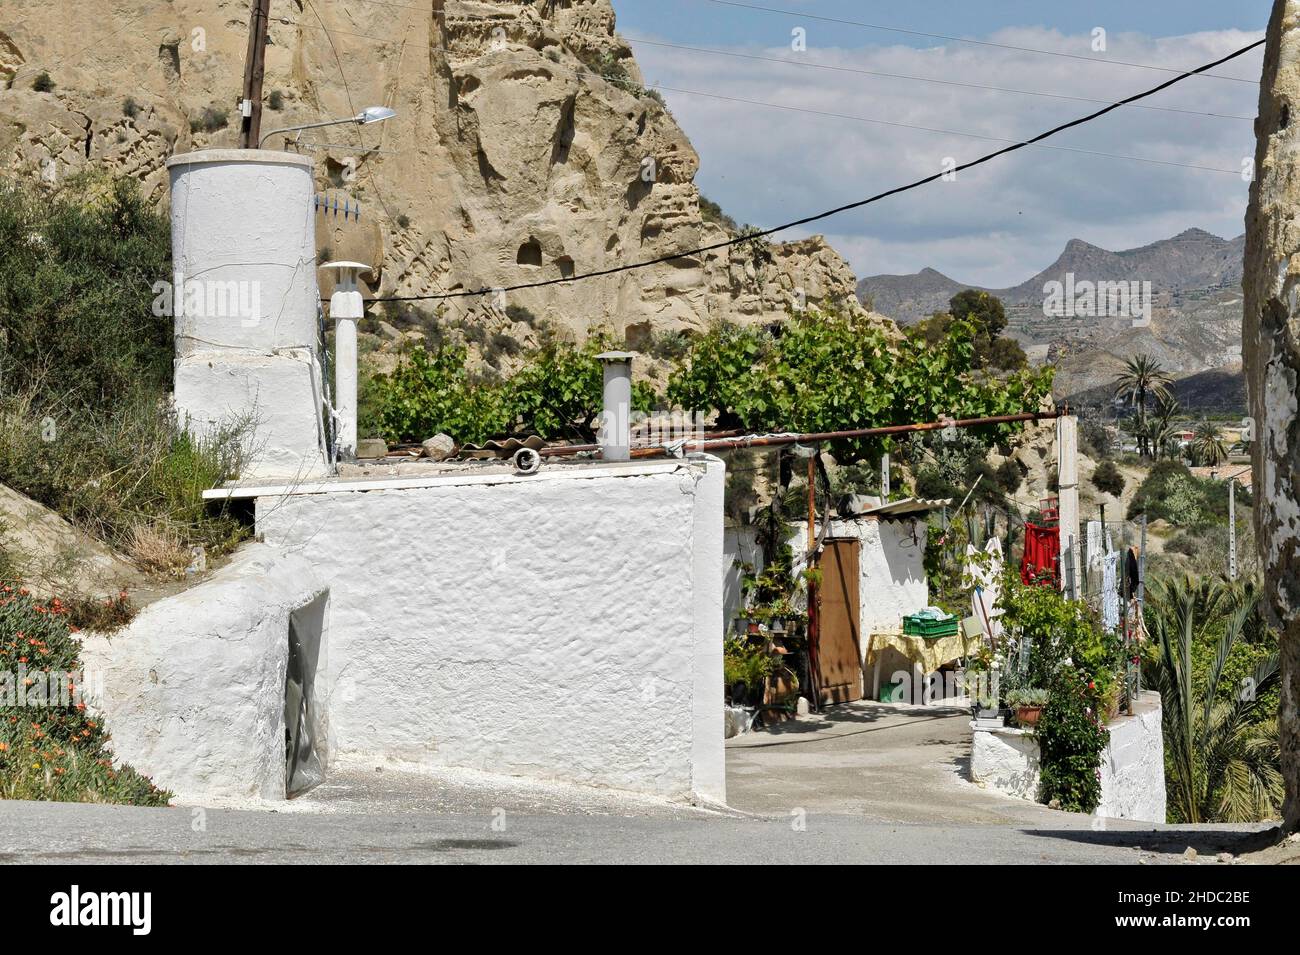 White cave house in front of rocks, Calguerin, Cuevas del Almanzora, Andalucia, Spain, Europe Stock Photo